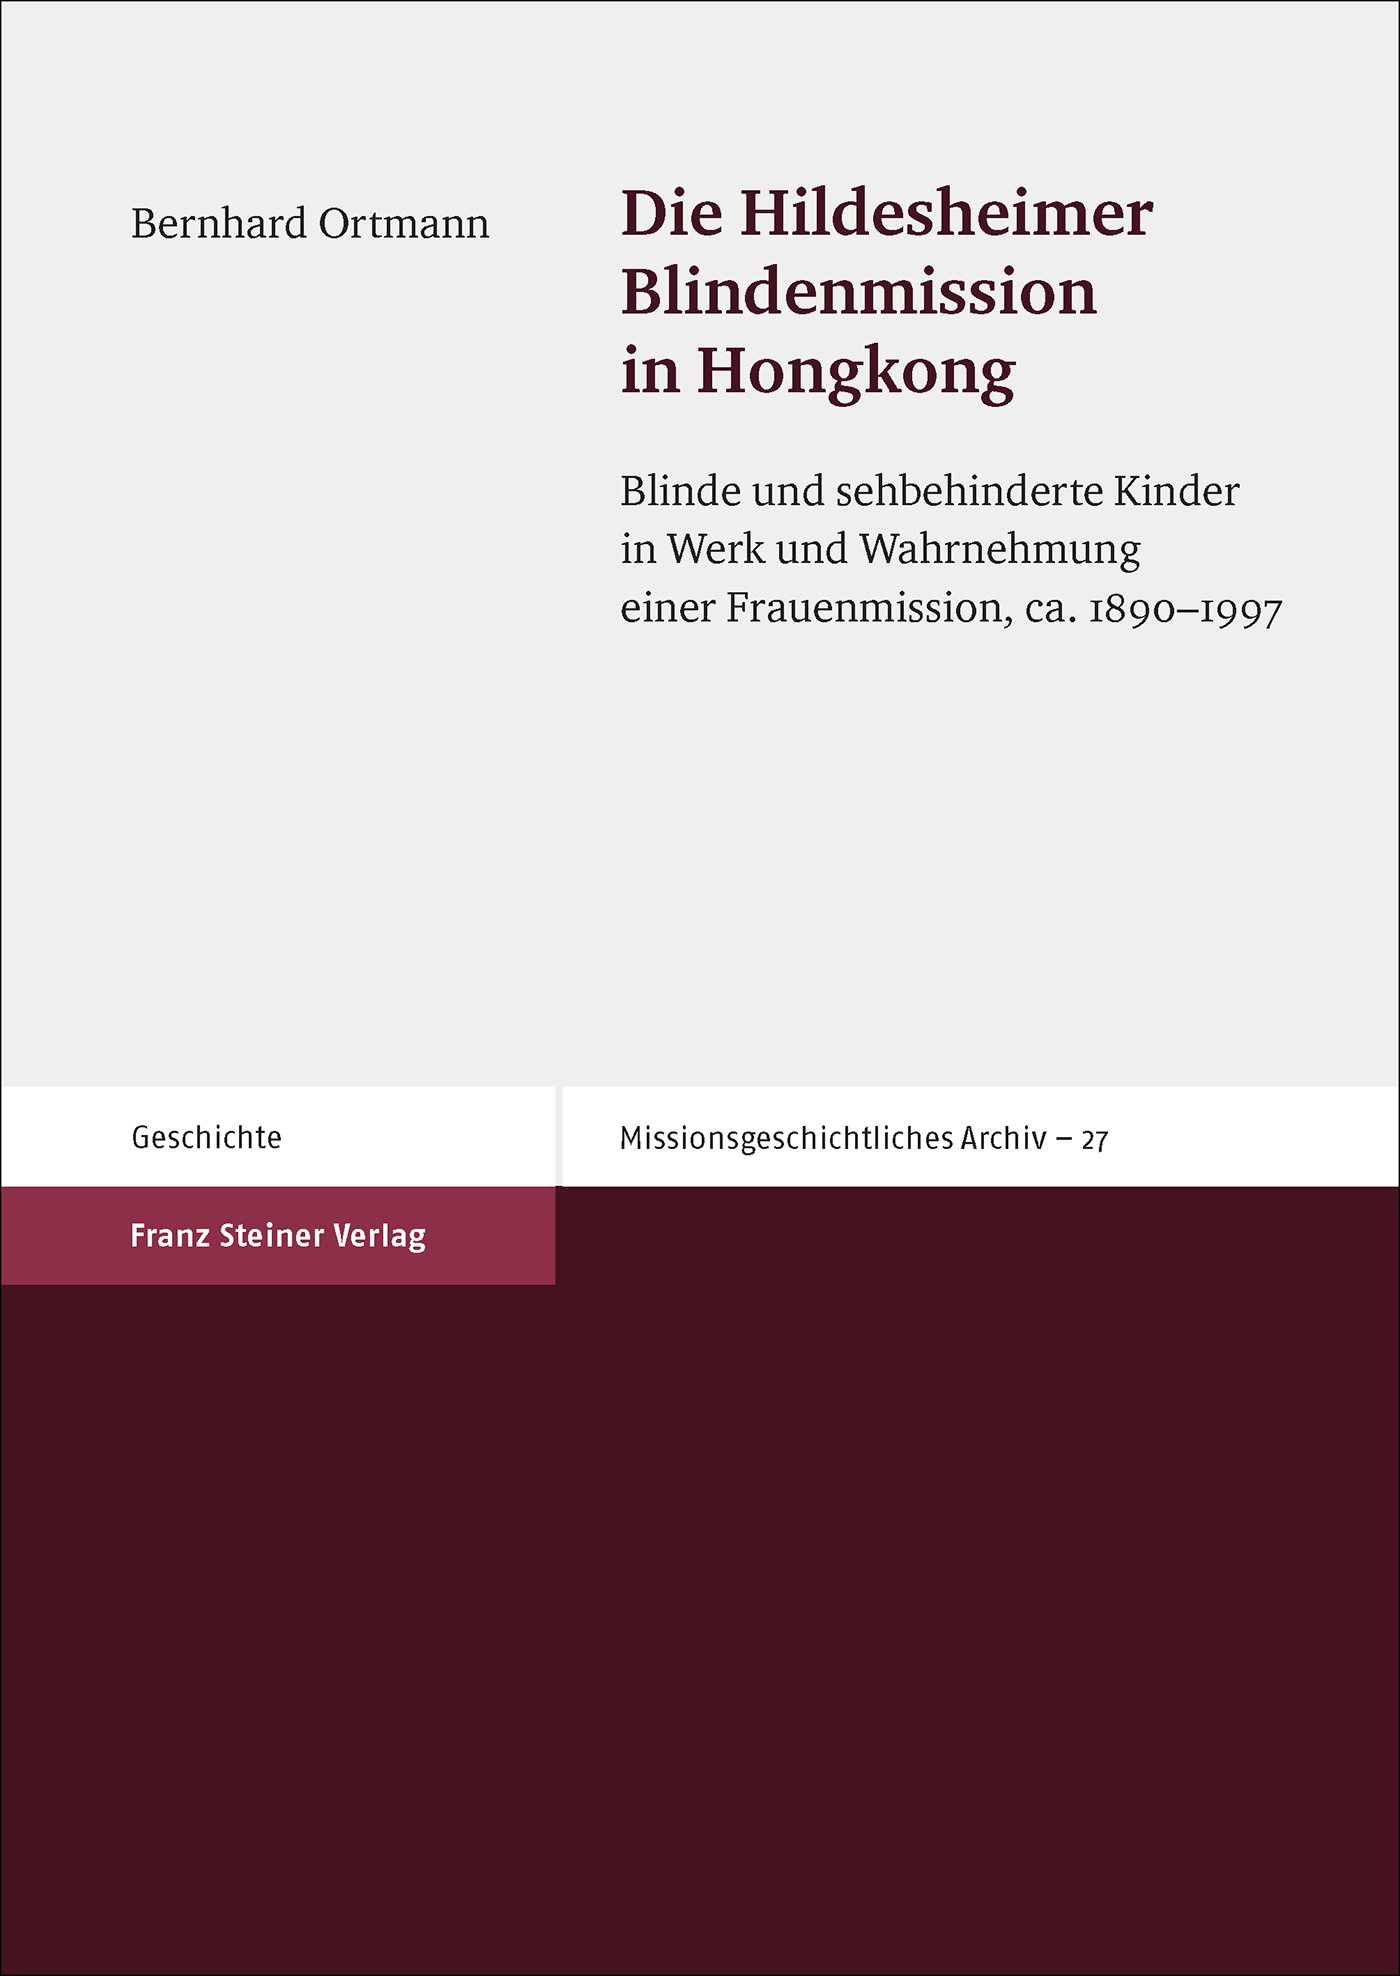 Die Hildesheimer Blindenmission in Hongkong